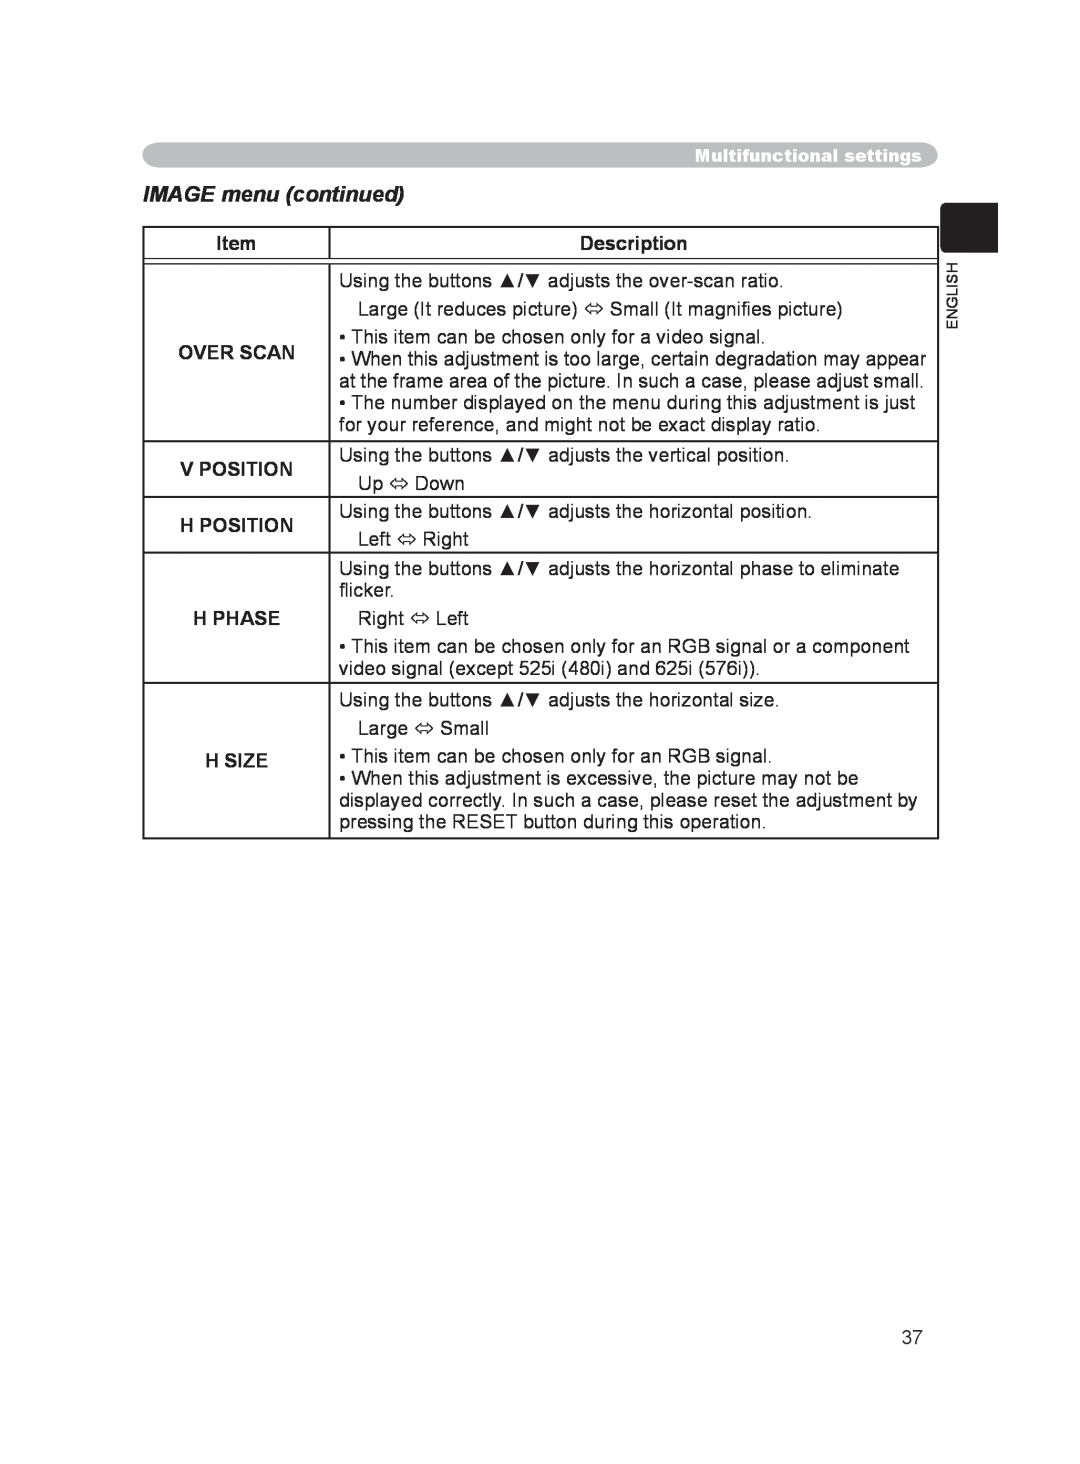 Hitachi PJ-LC9 user manual IMAGE menu continued, Description, Over Scan, V Position, H Position, H Phase, H Size 